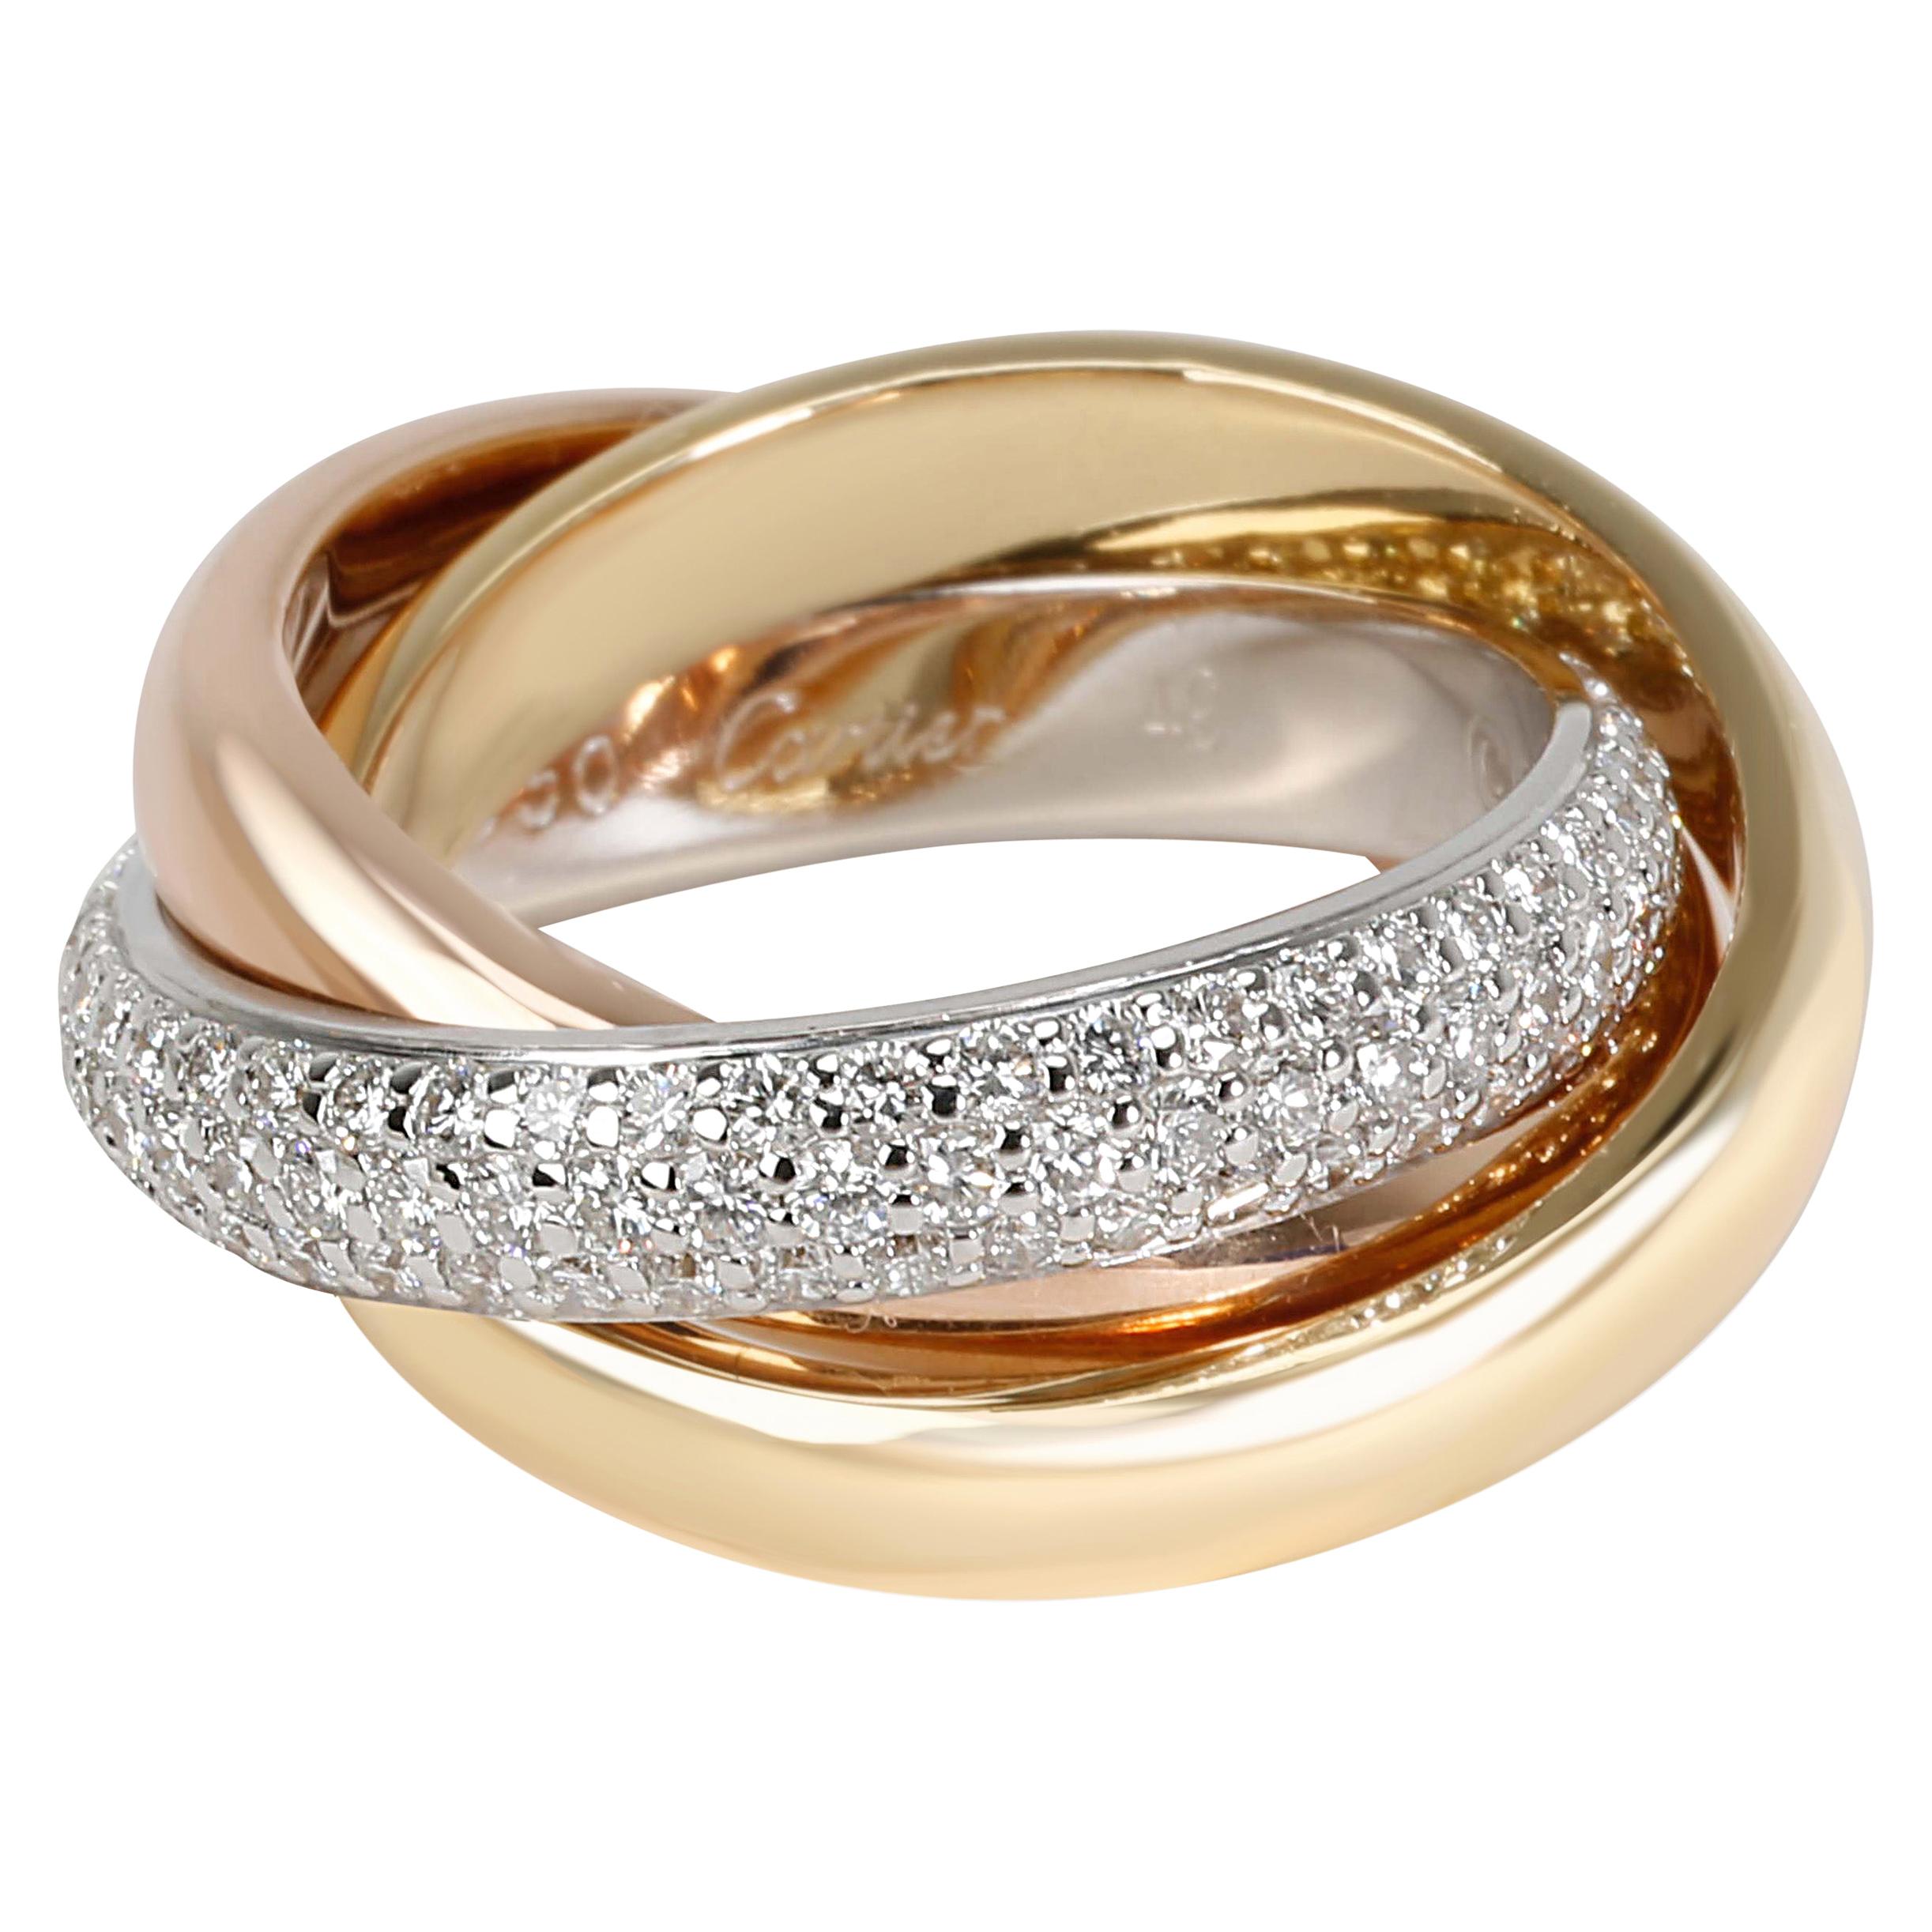 Cartier Trinity Diamond Ring 'Classic' in 18 Karat Tri Colored Gold 0.99 Carat